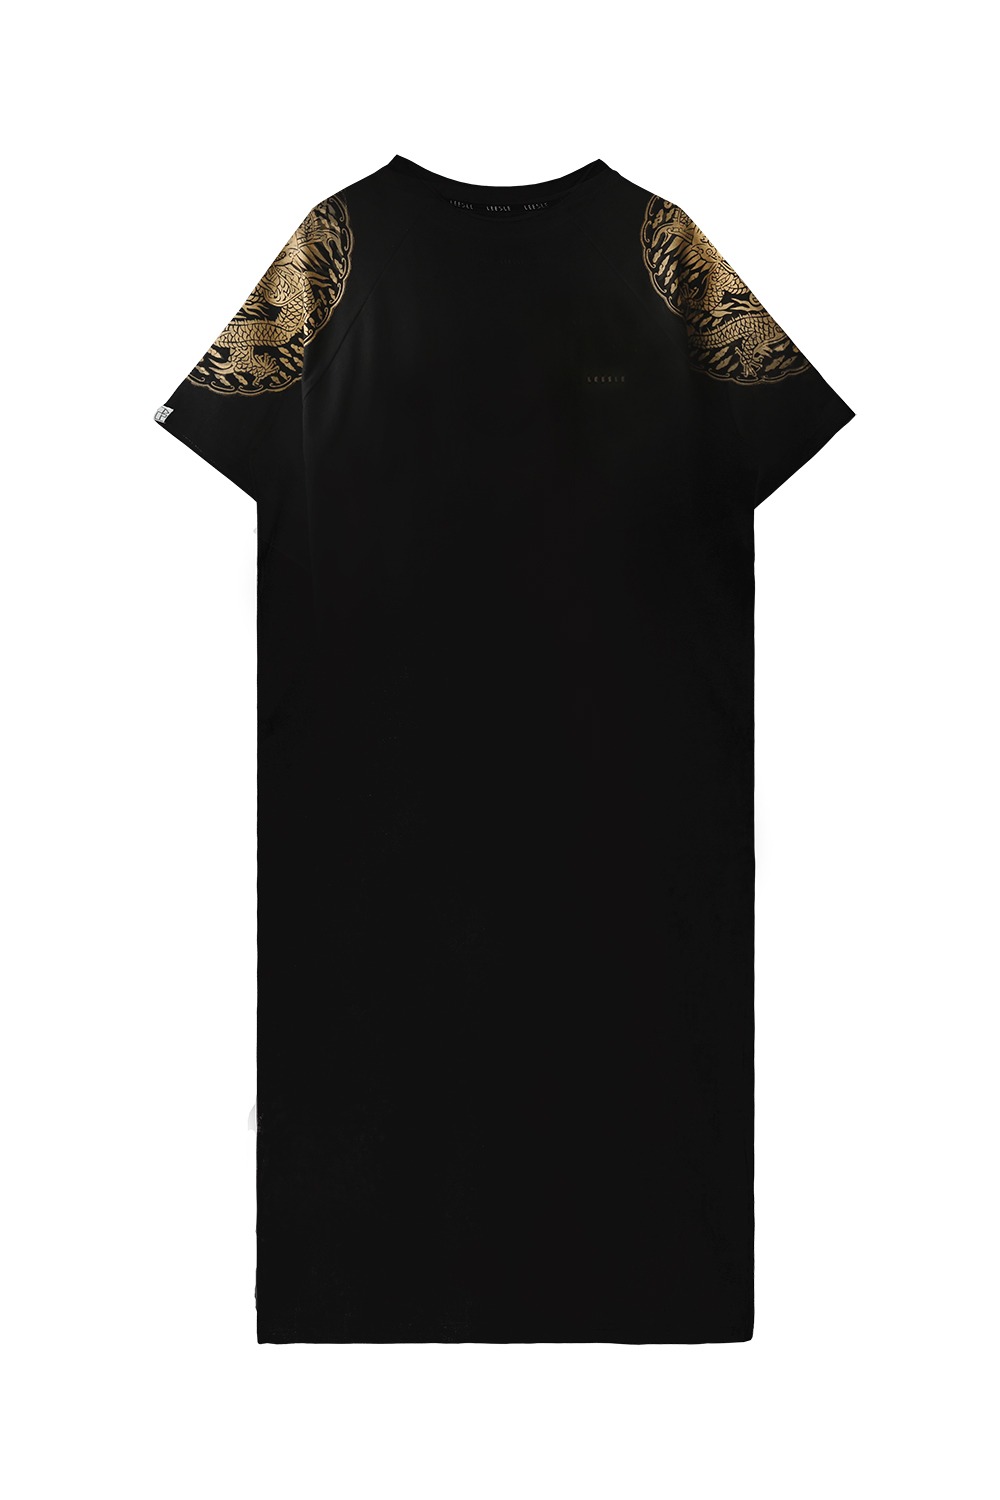 Dragon T-shirt Dress [Black]